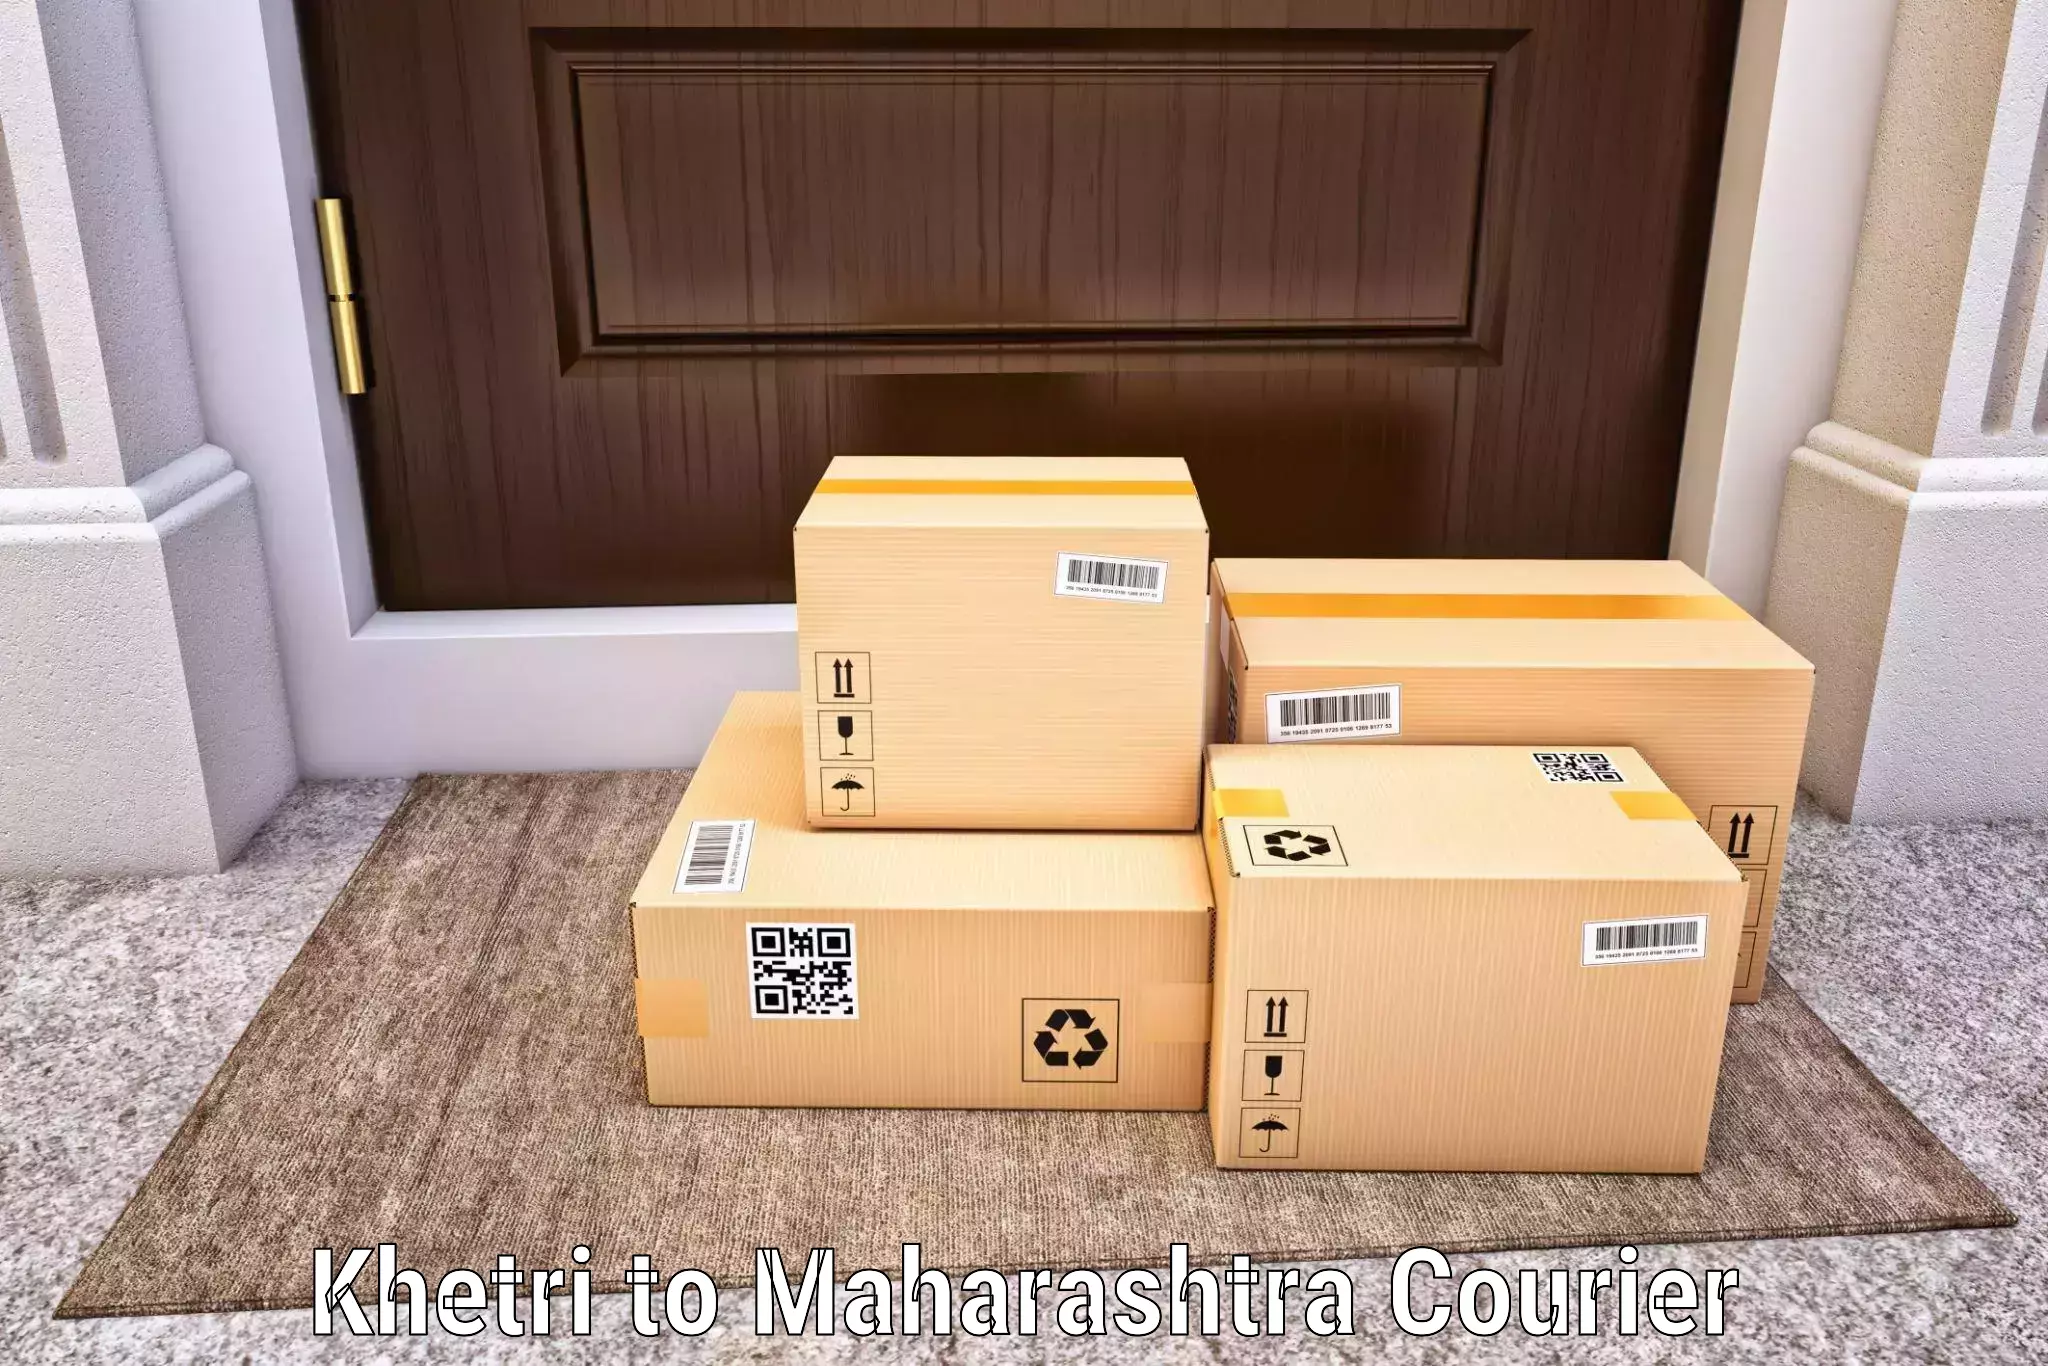 Courier service innovation Khetri to Alibag